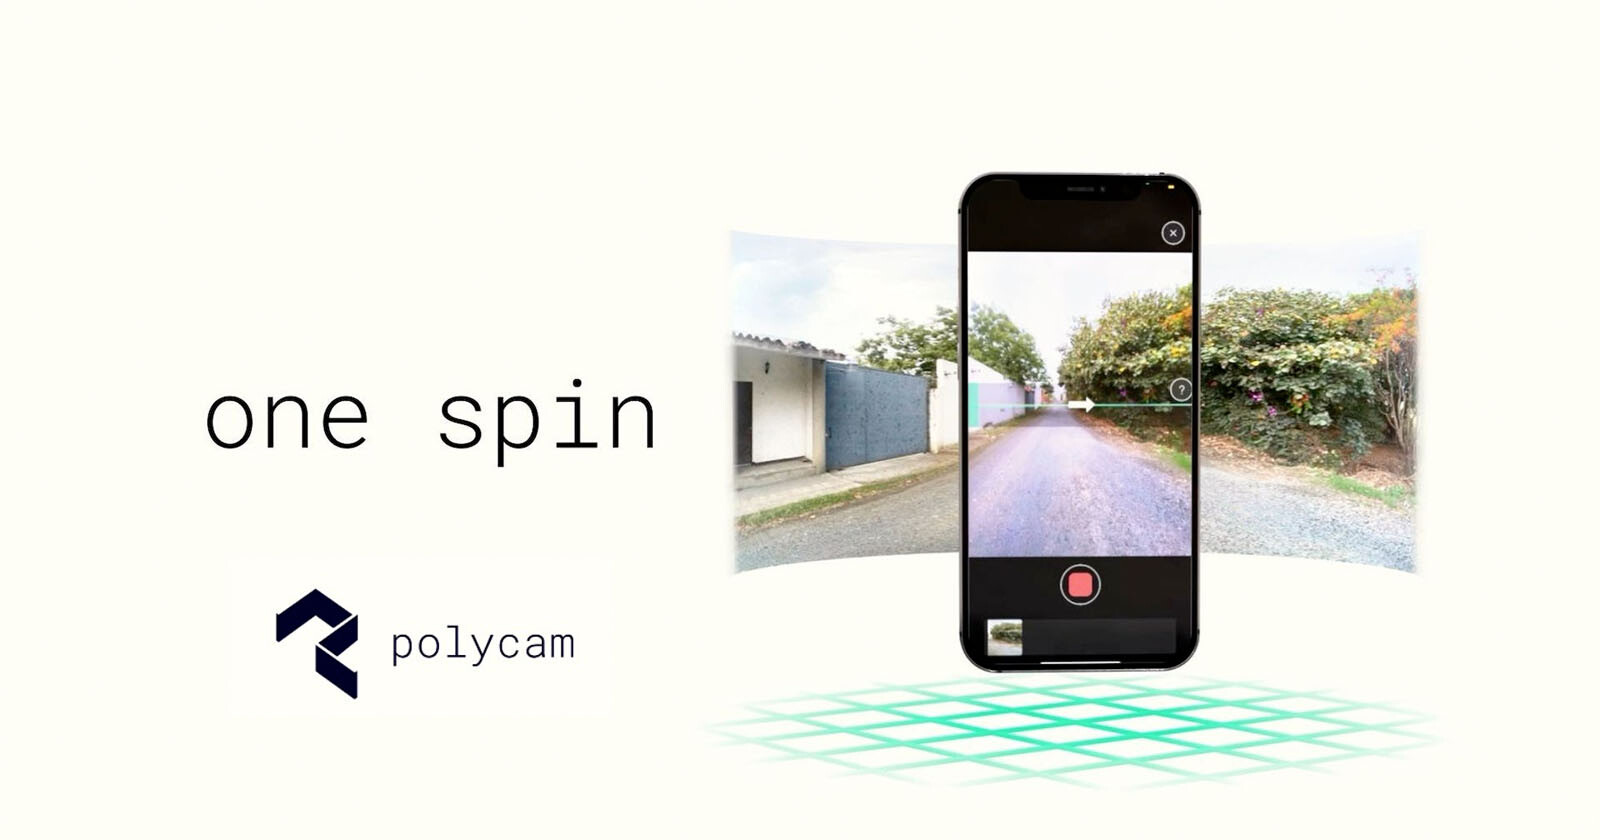  polycam app turns iphones into 360-degree cameras 